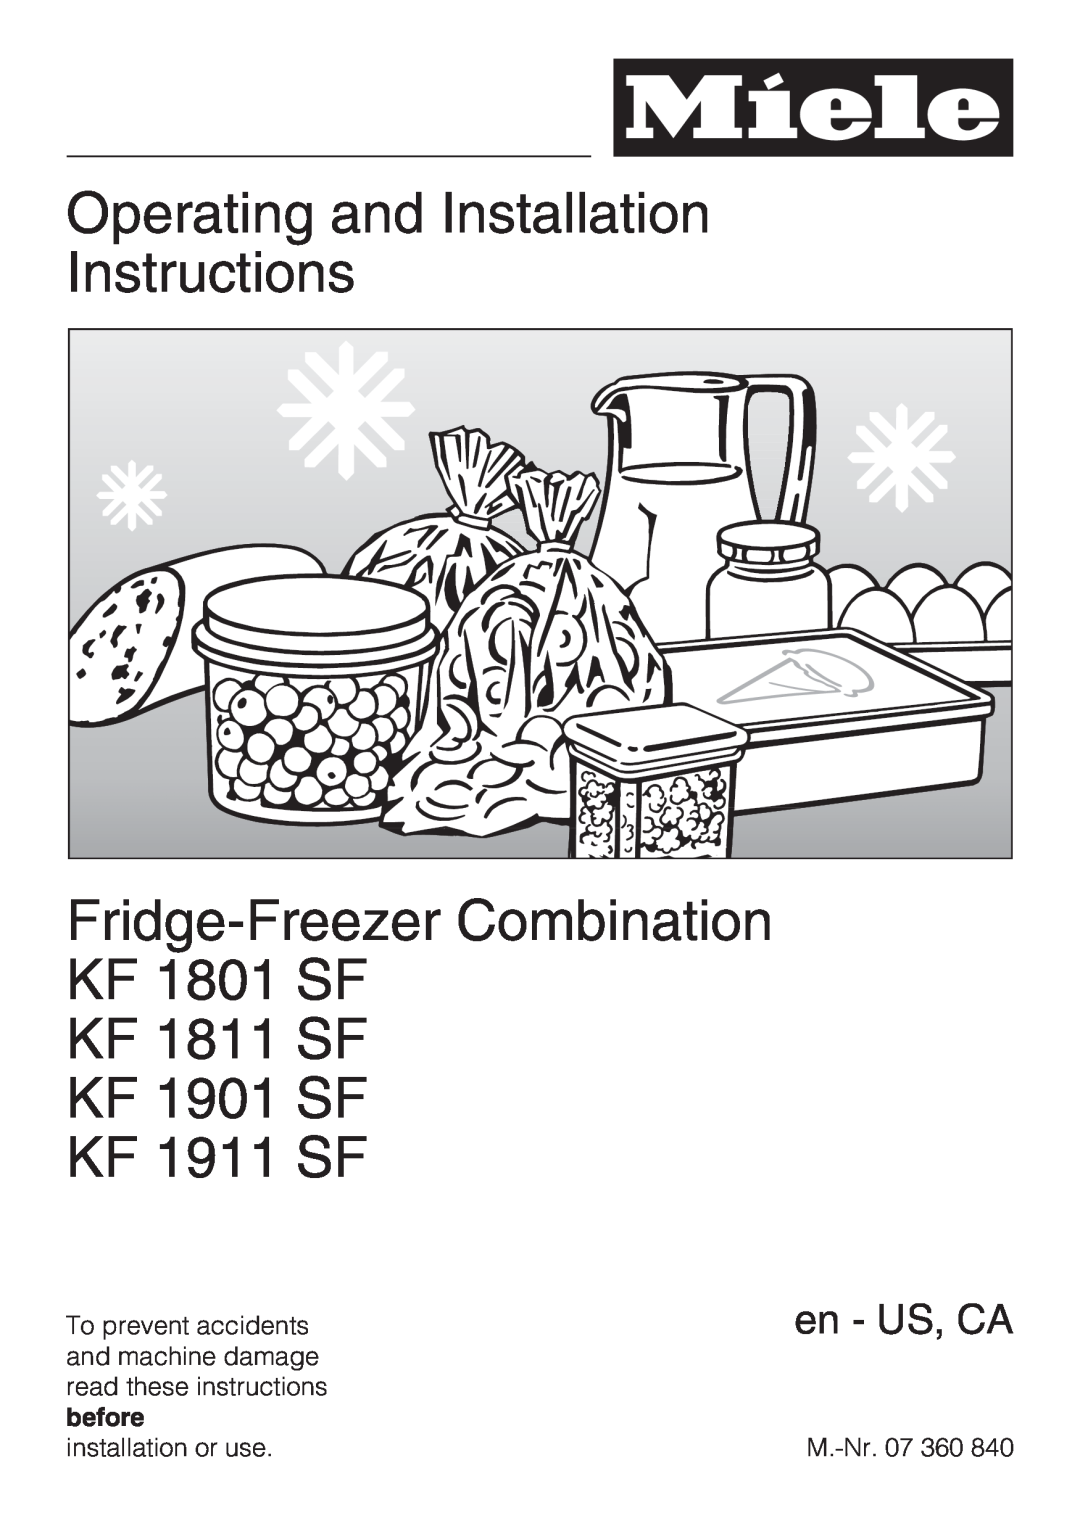 Miele KF1901SF installation instructions Operating and Installation Instructions, KF 1901 SF KF 1911 SF, en - US, CA 